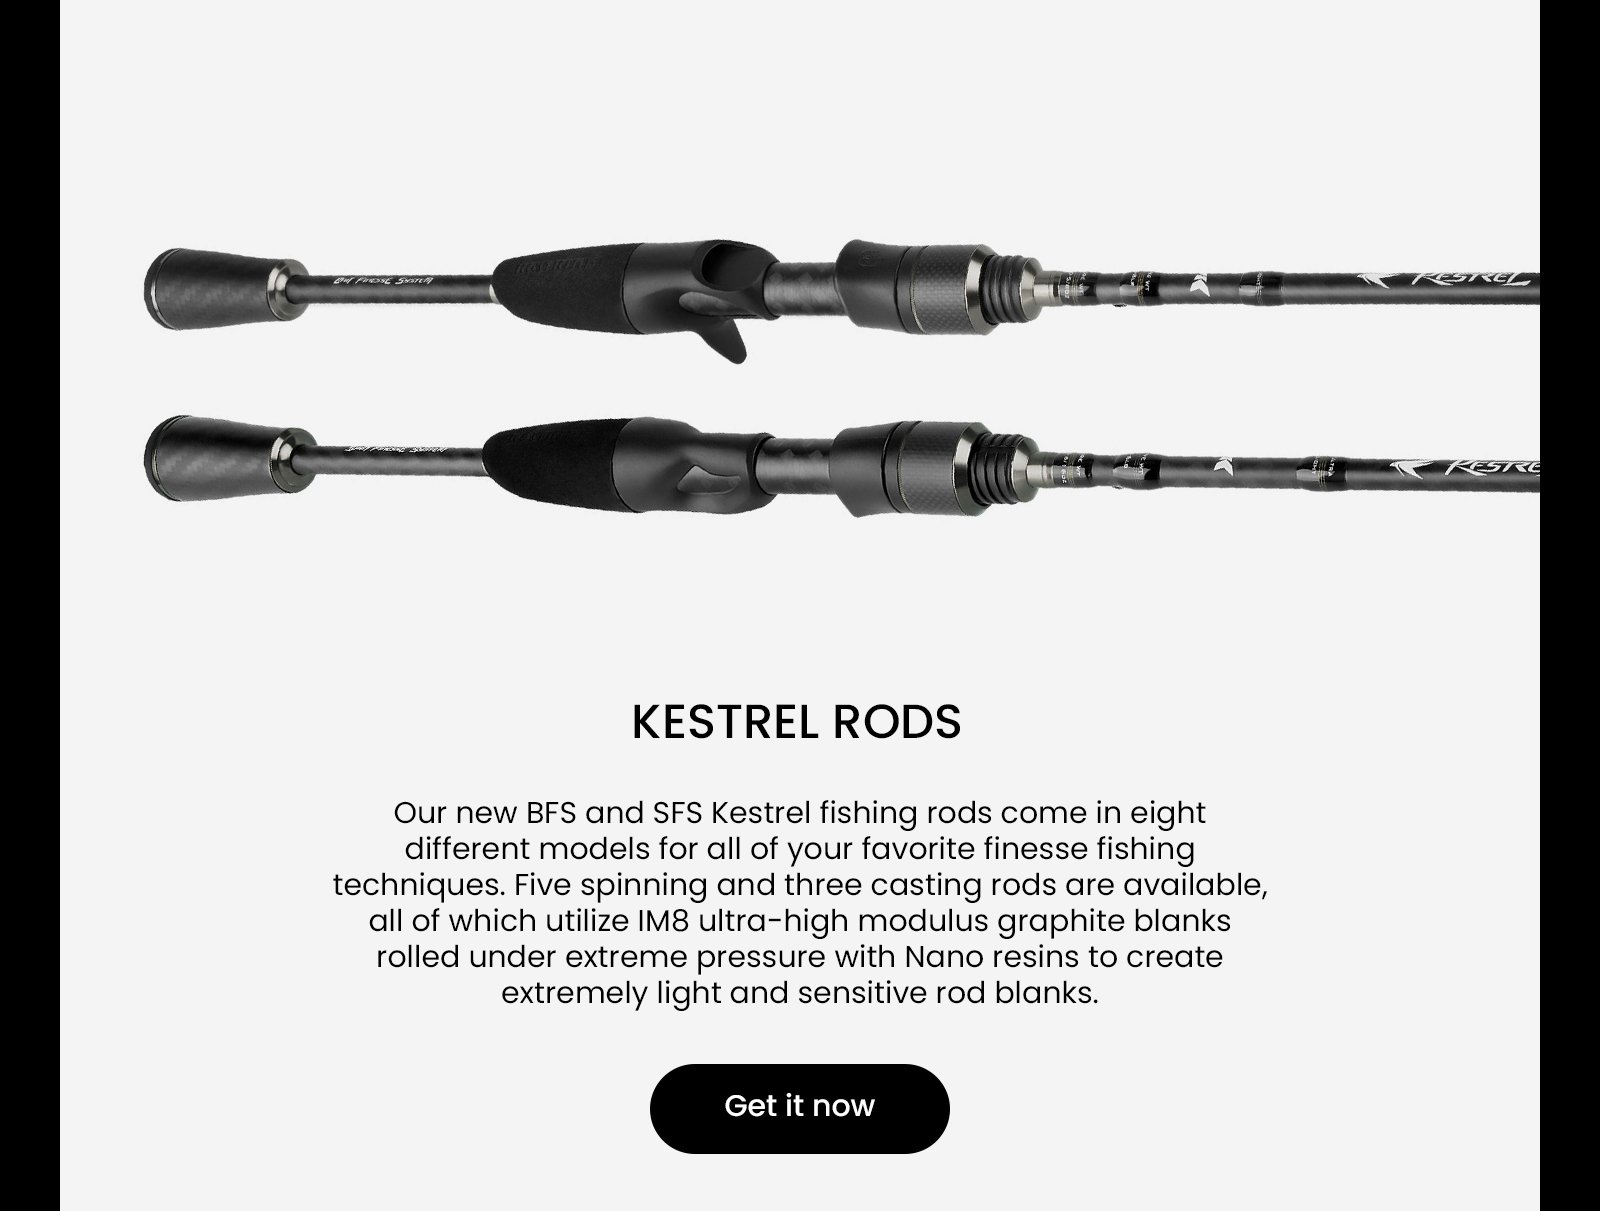 New Arrival - Kestrel finesse fishing rods! - KastKing